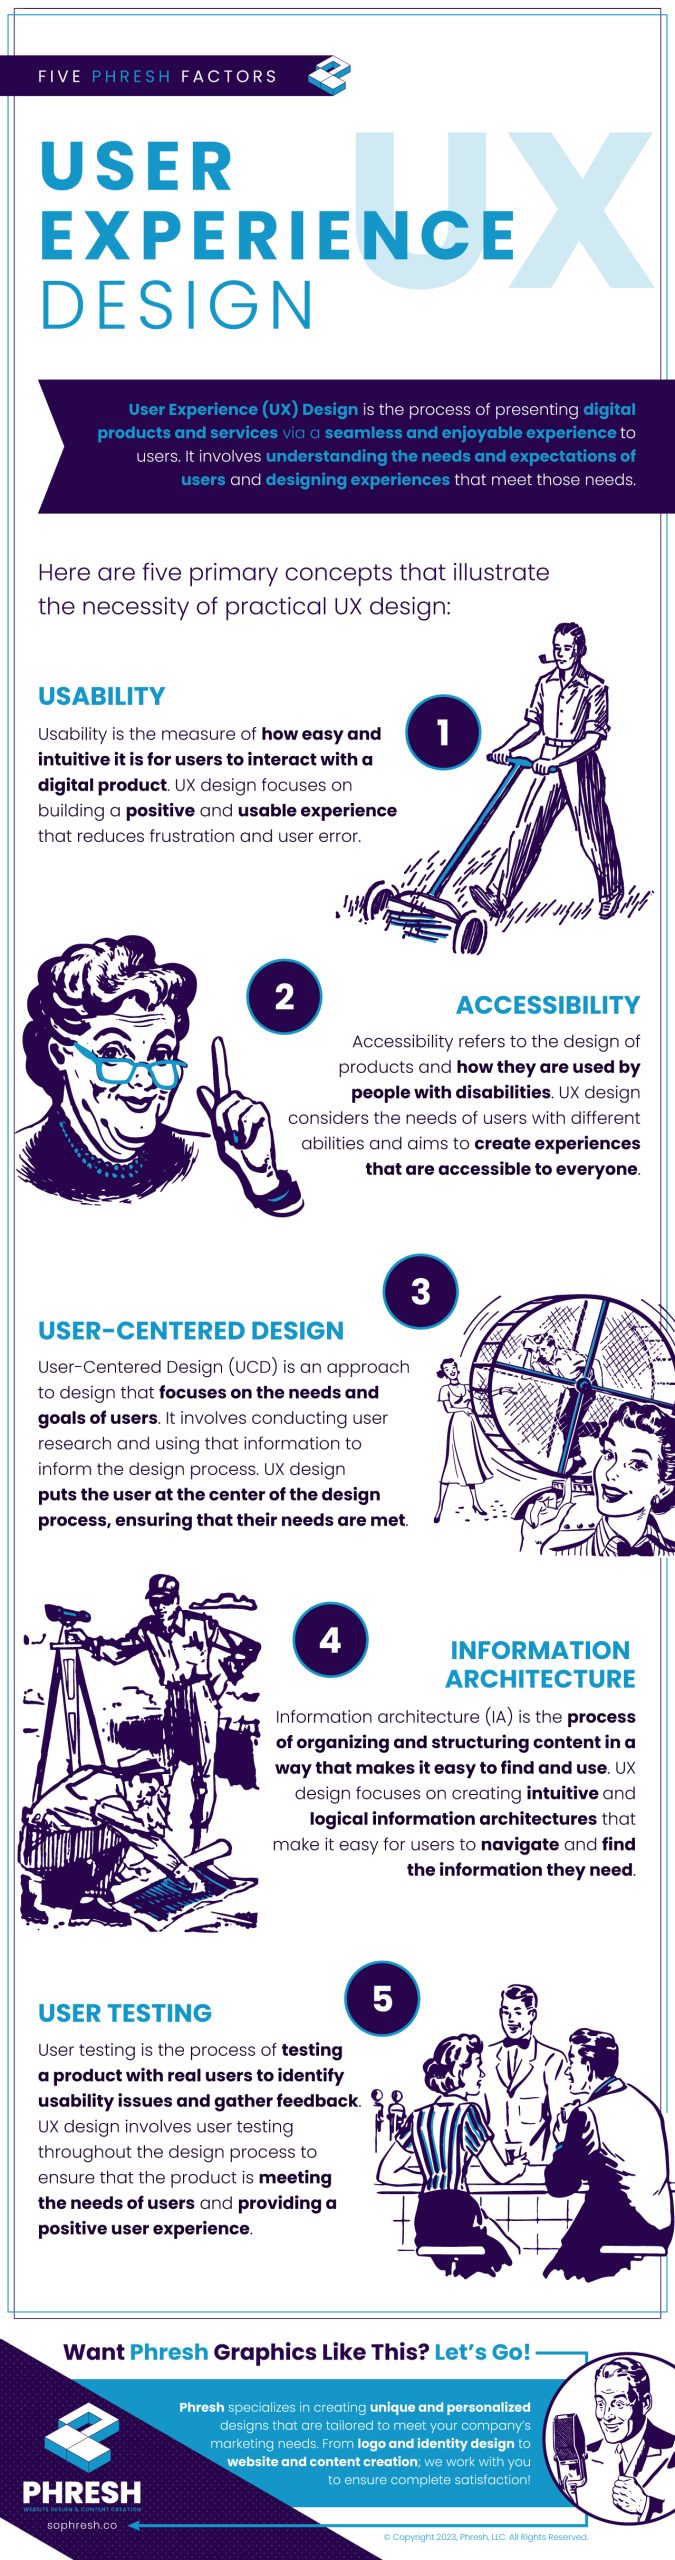 5 User Experience Design Factors